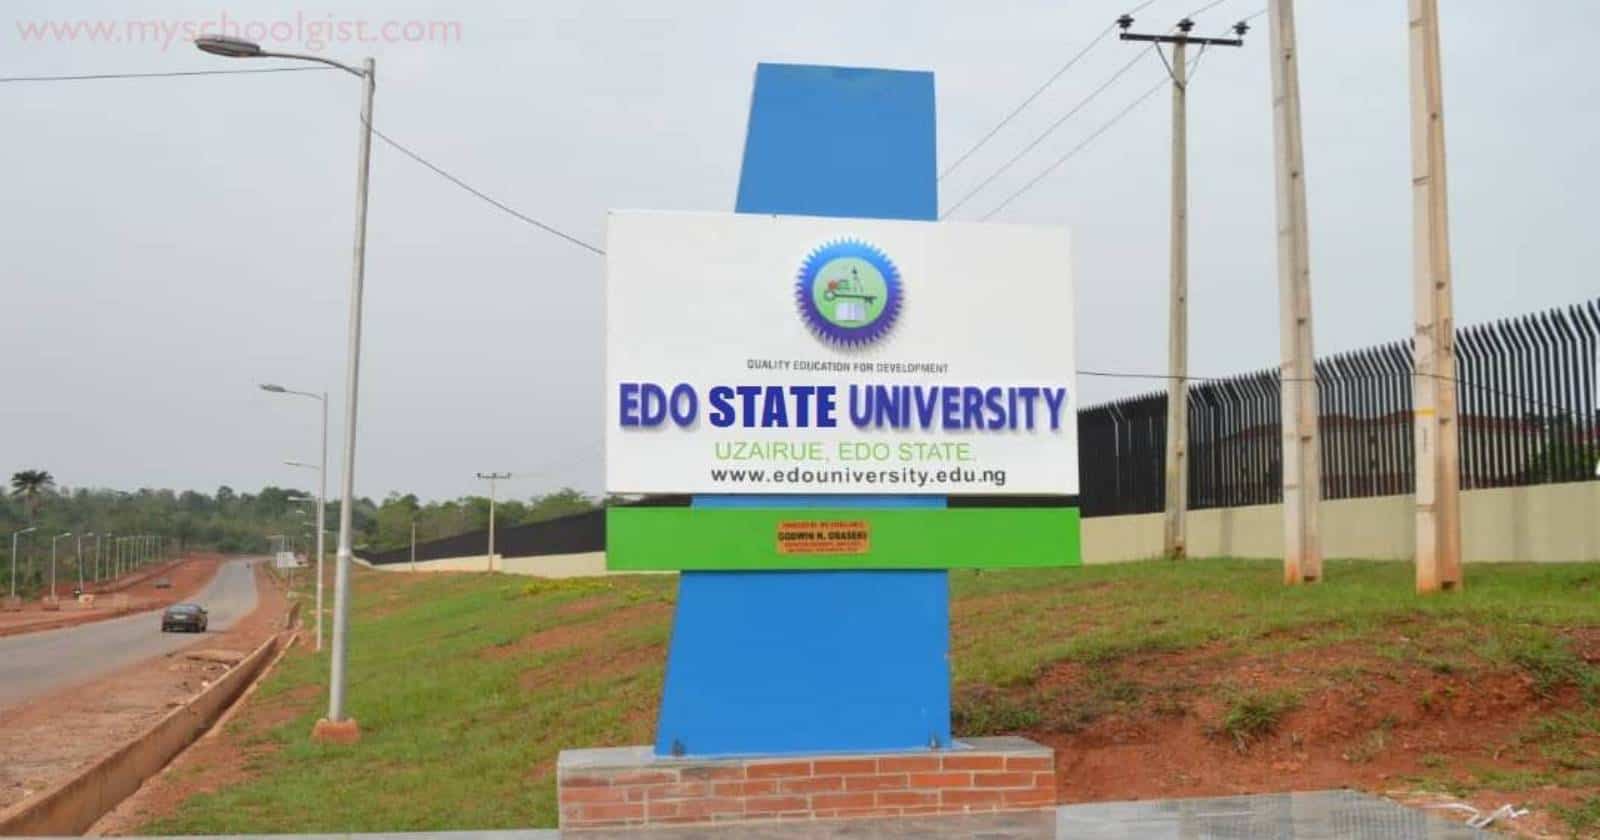 Edo State University (EDSU) School Fees Schedule